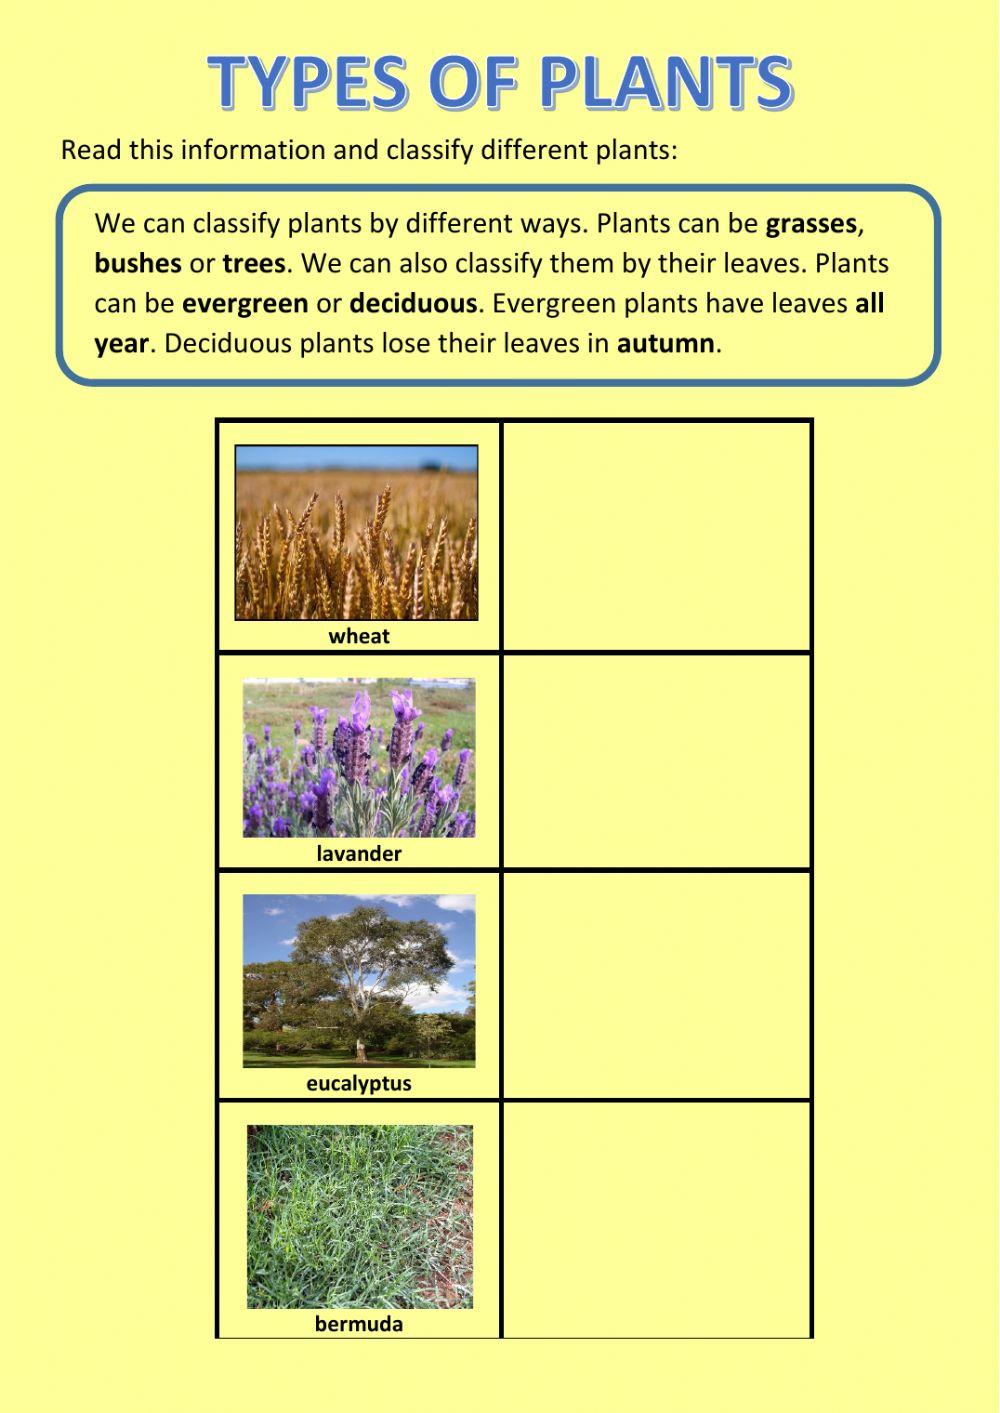 Classify plants